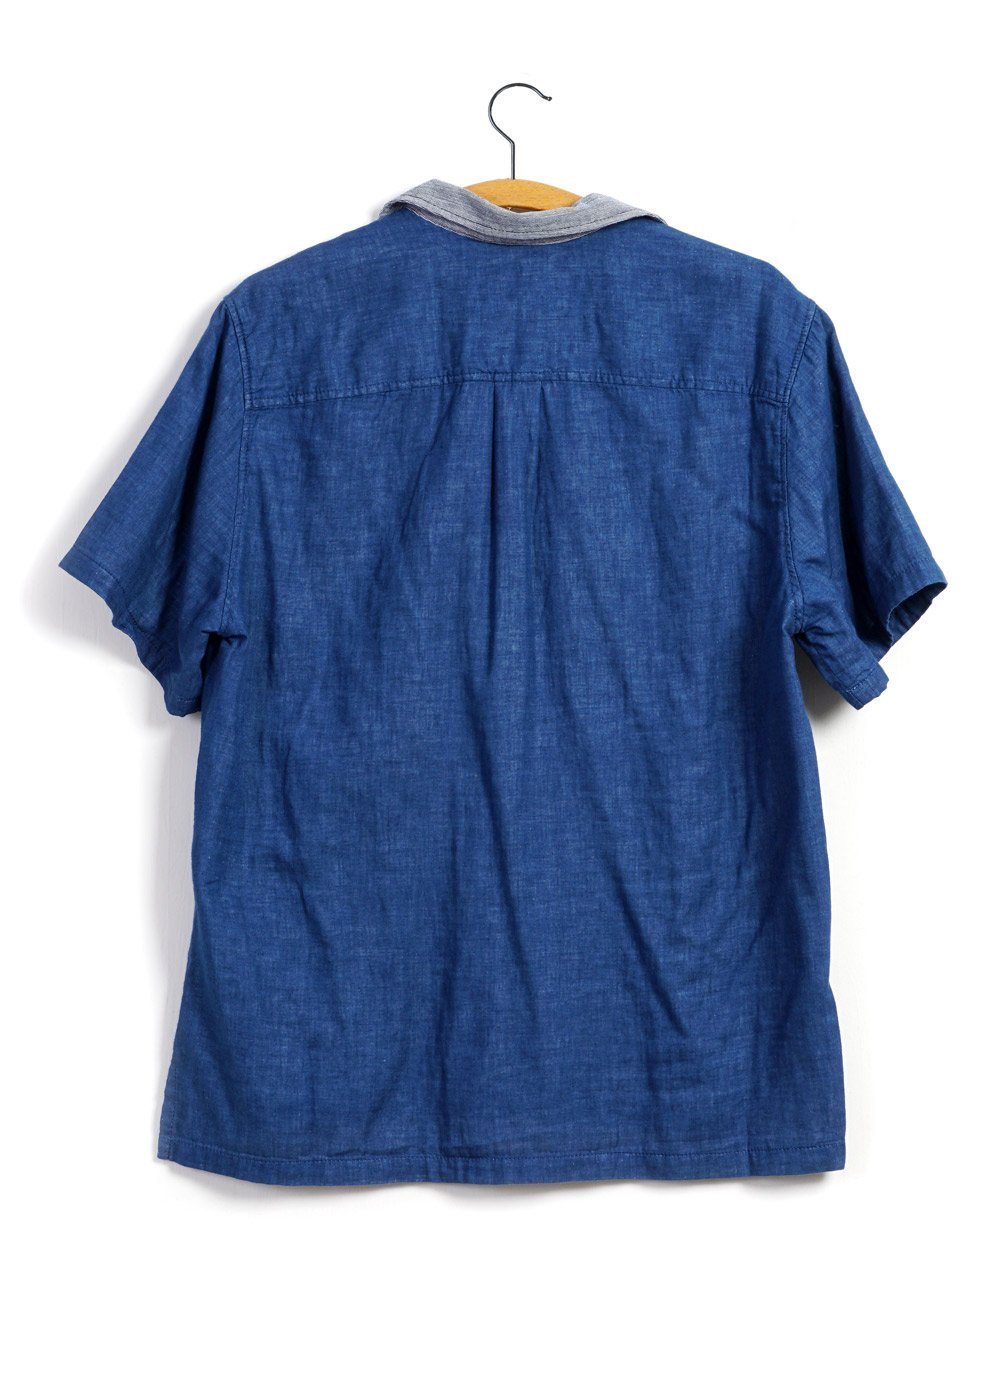 PHILLIP | Short Sleeve Pull-On Shirt | Indigo/Stripe -HANSEN Garments- HANSEN Garments